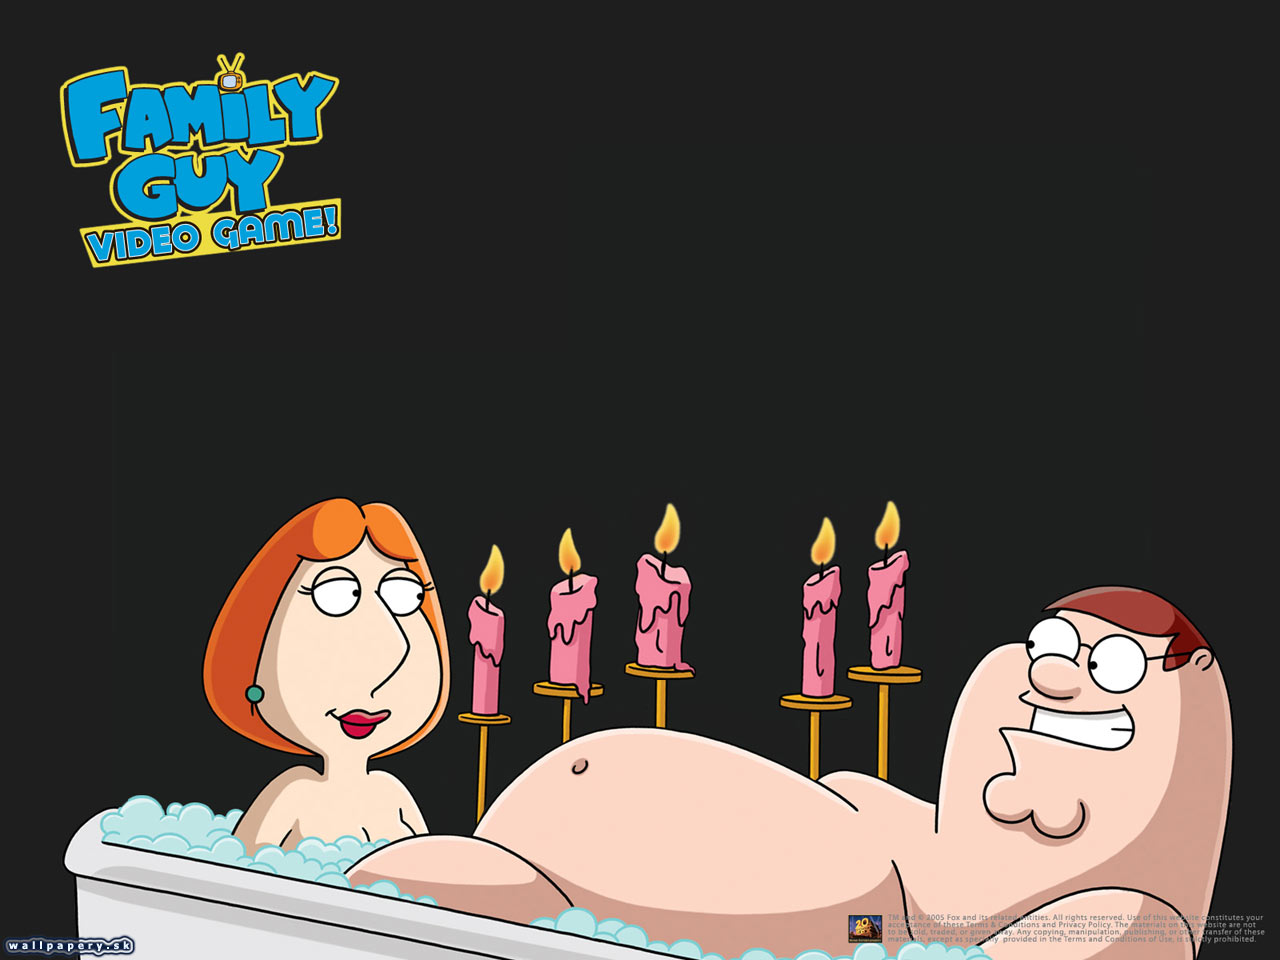 Family Guy: The Videogame - wallpaper 2